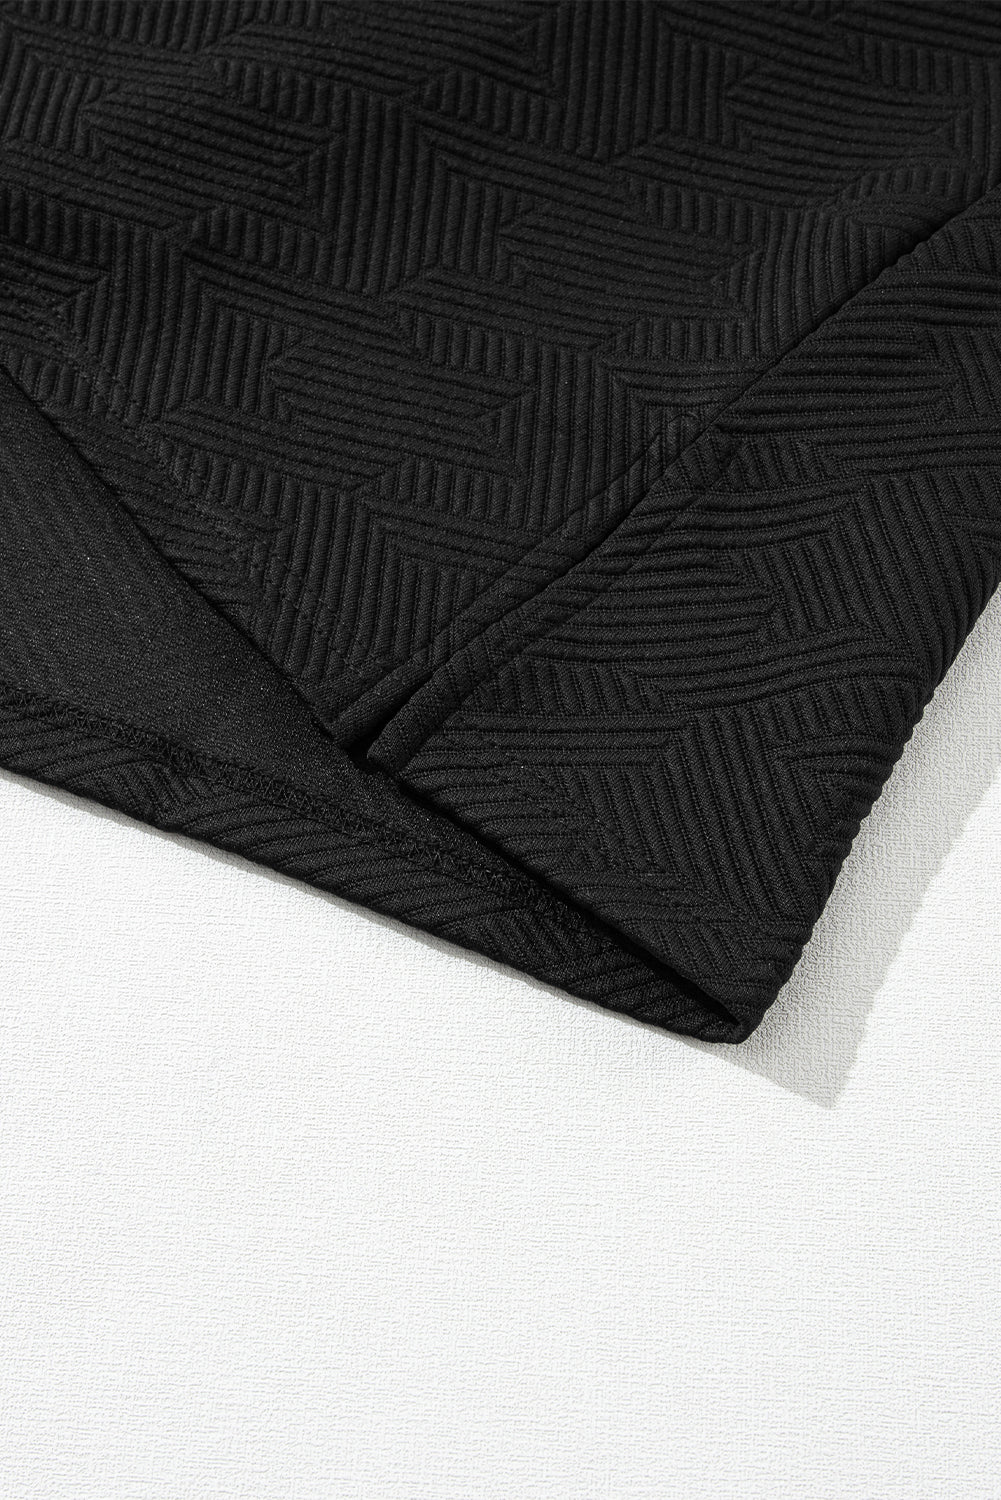 Black Textured V Neck Collared Short Sleeve Top